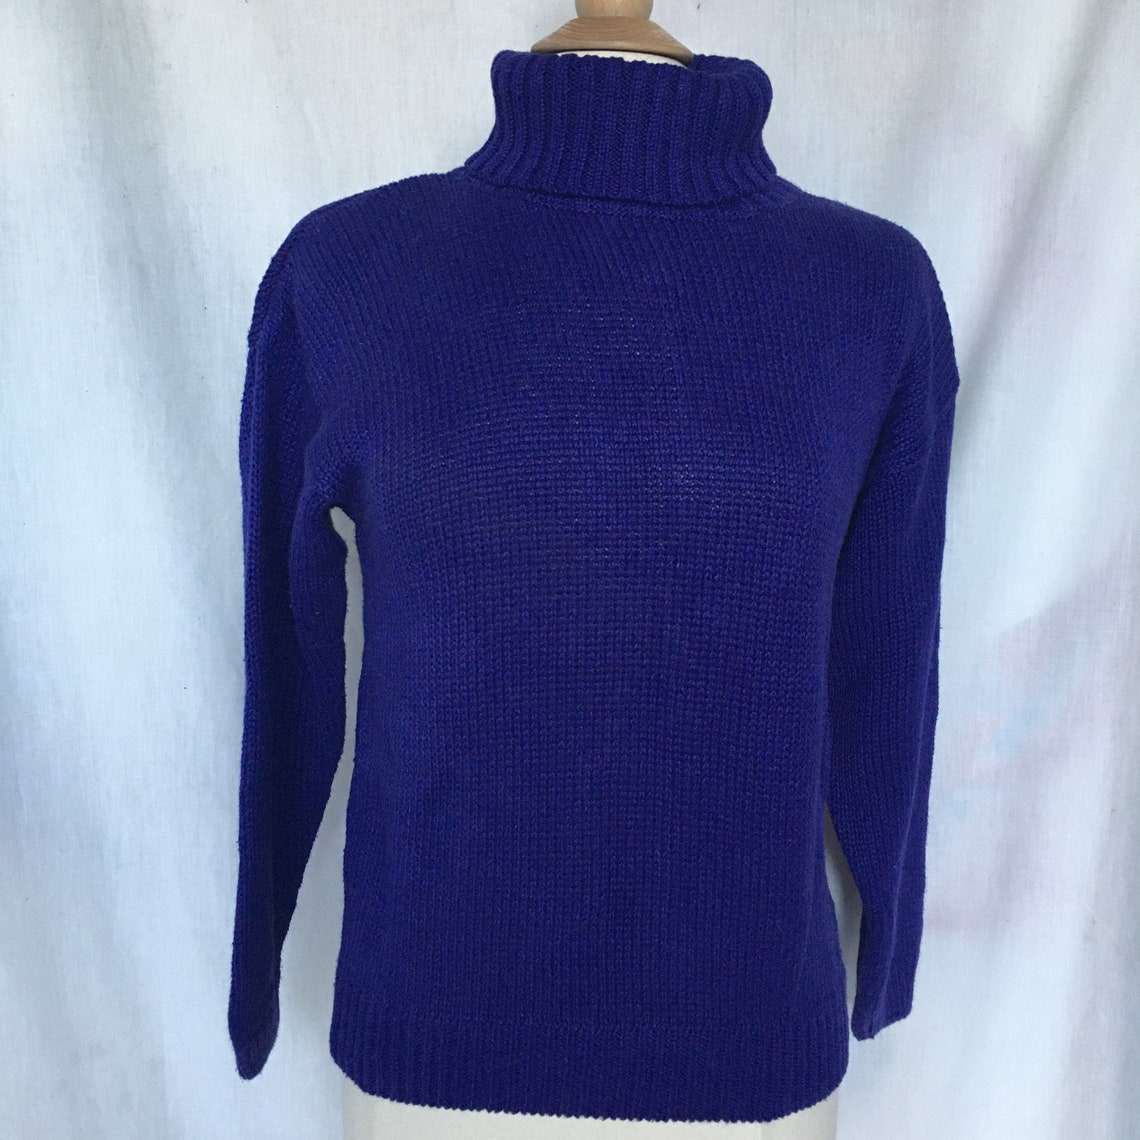 Vintage 90s Purple Turtleneck Sweater by rosanna - Etsy